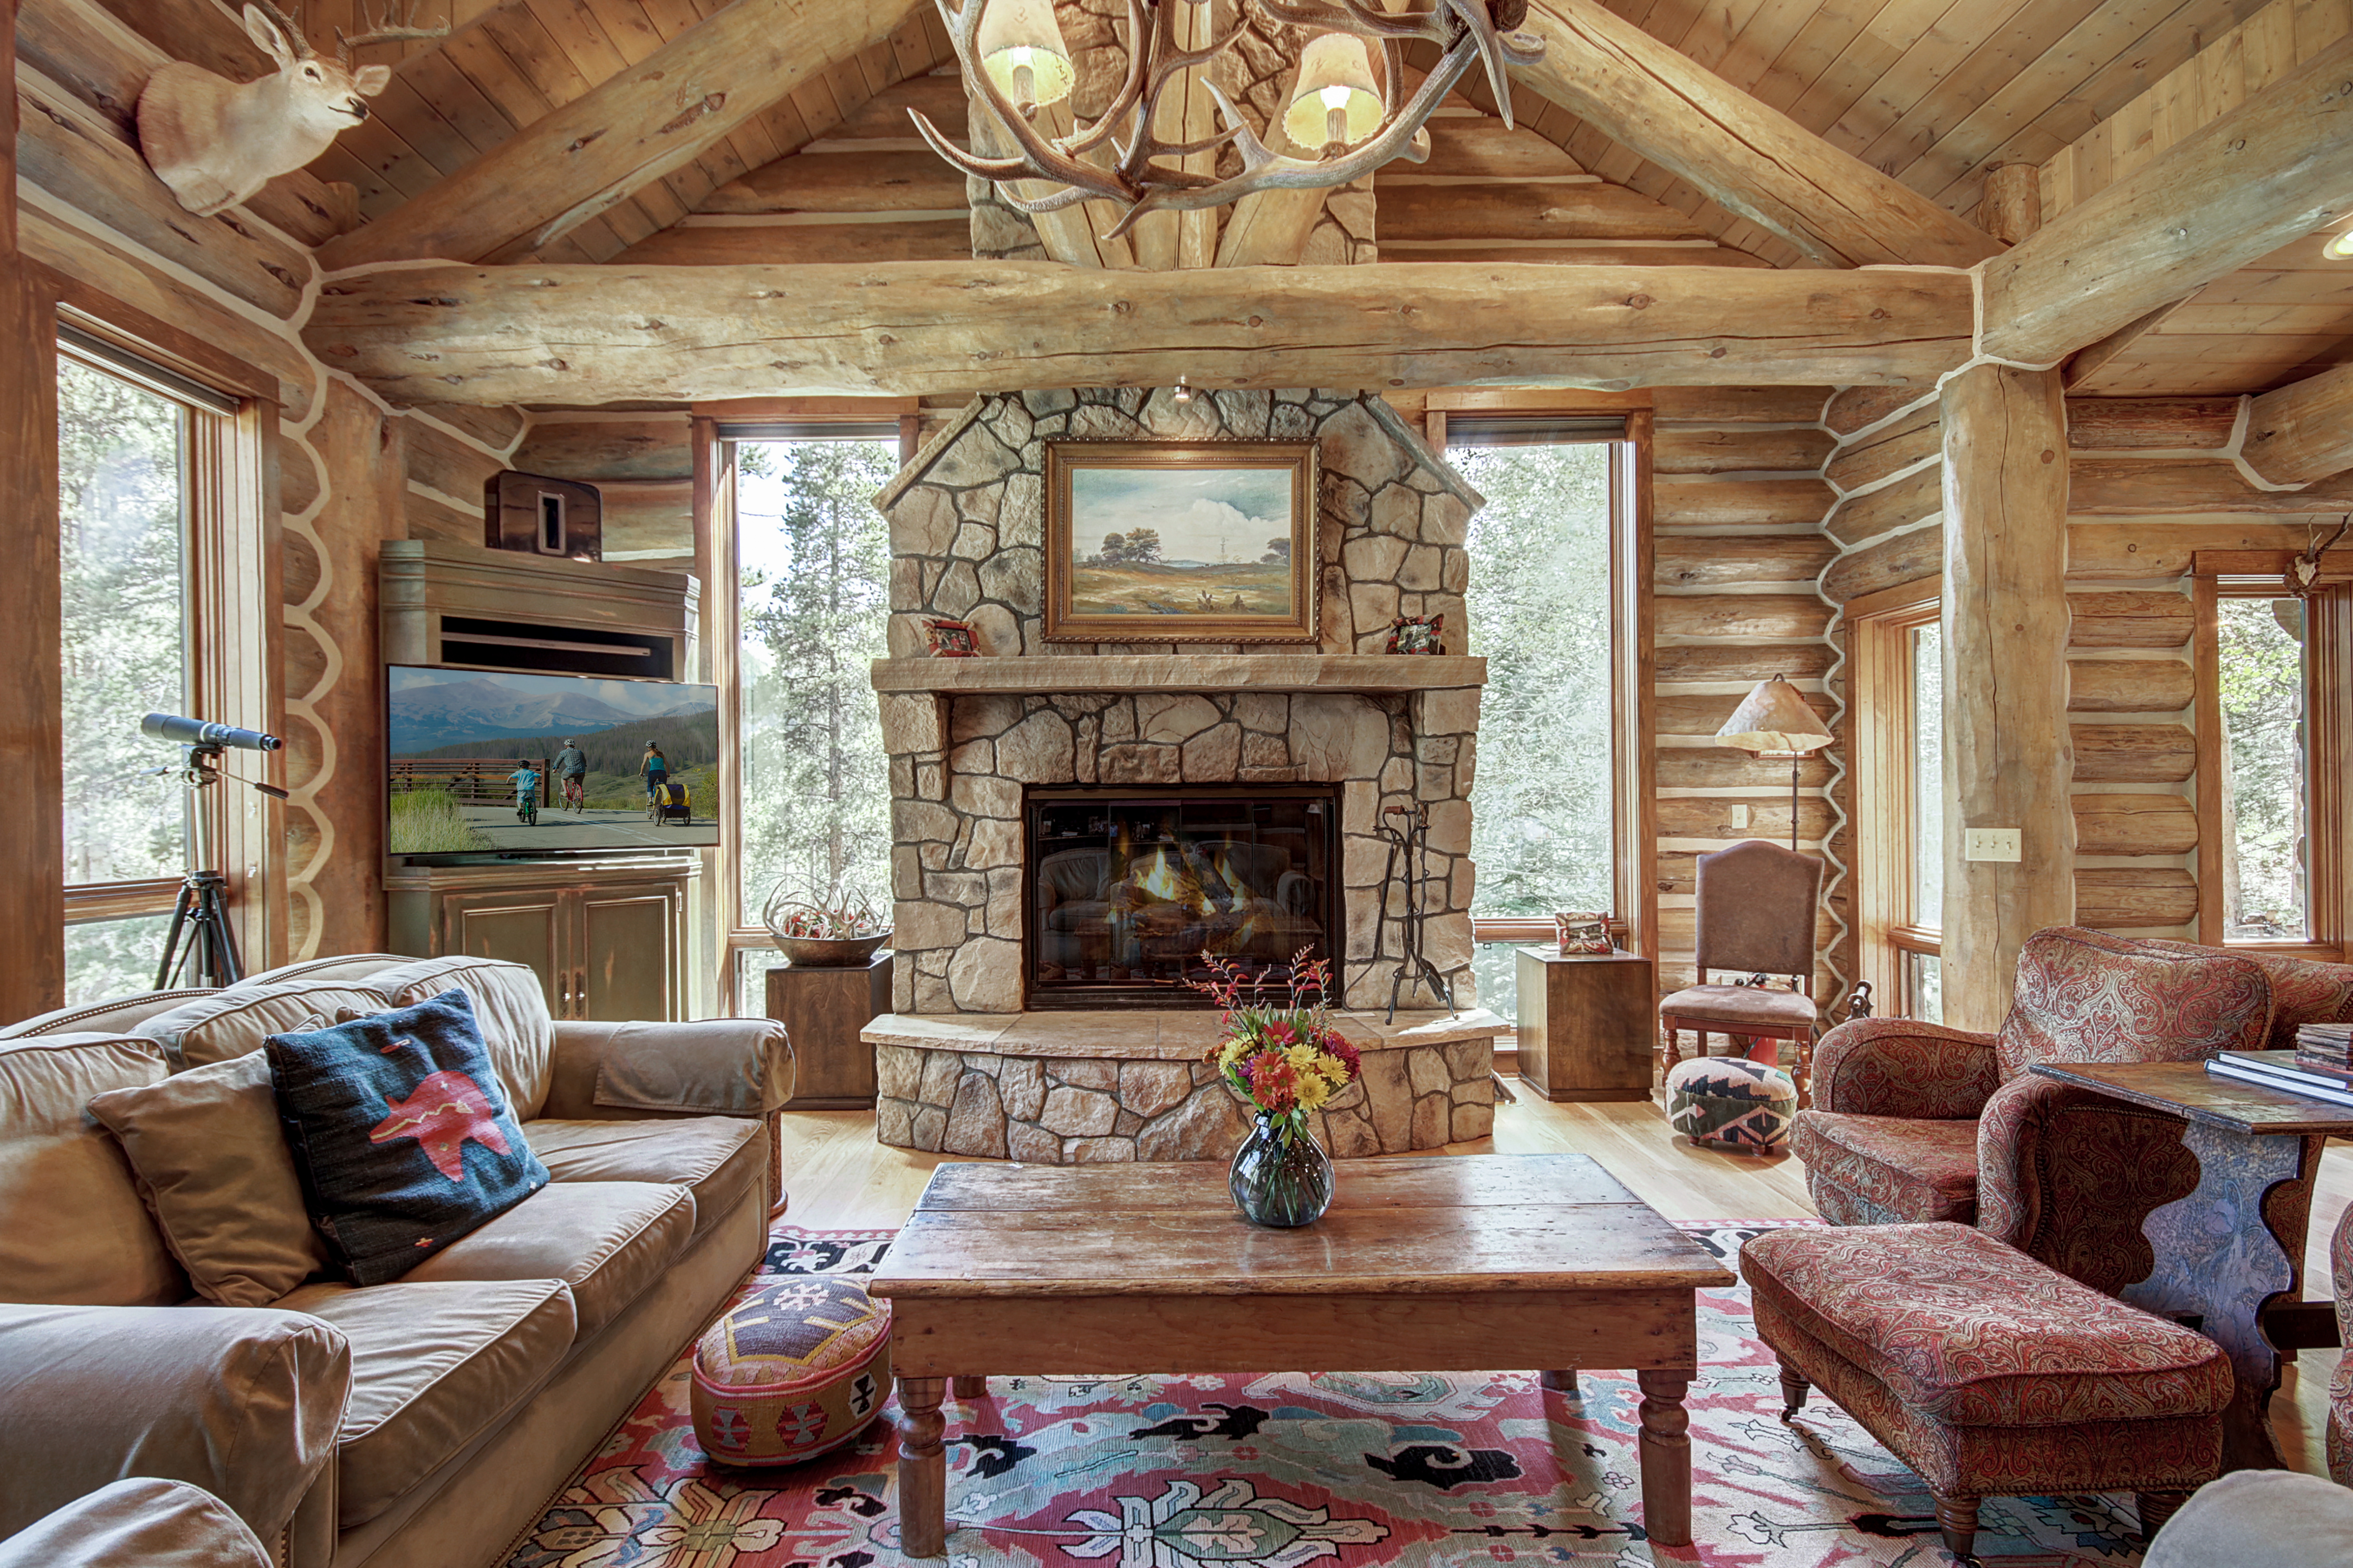 This beautiful log interior will make you feel right at home - Bear Lodge Breckenridge Vacation Rental